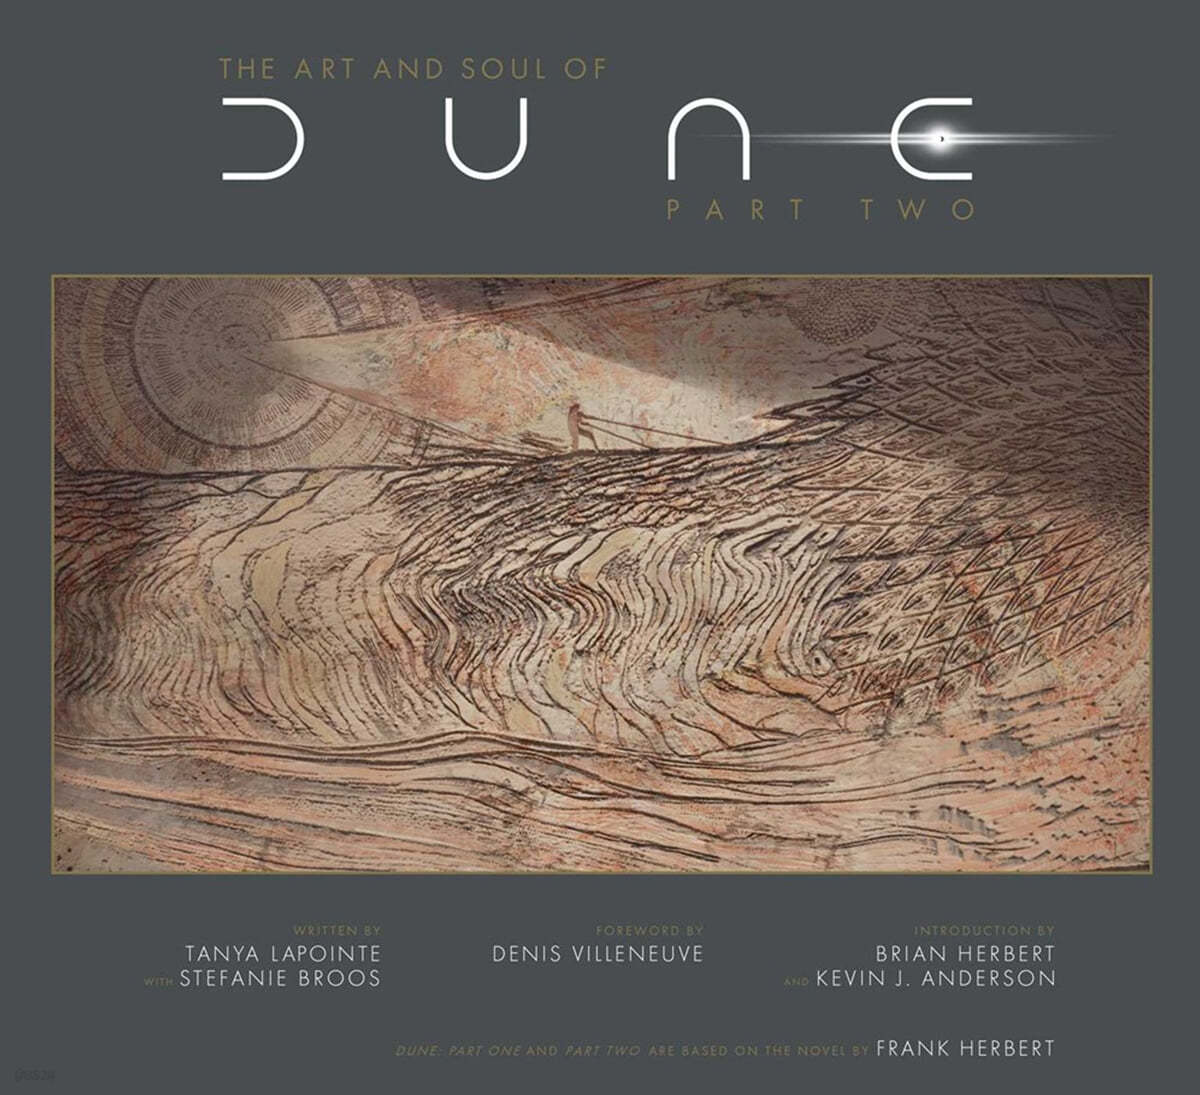 Art And Soul Of Dune: Part Two 영화 「듄: 파트2」 공식 컨셉 아트북 (미국판)